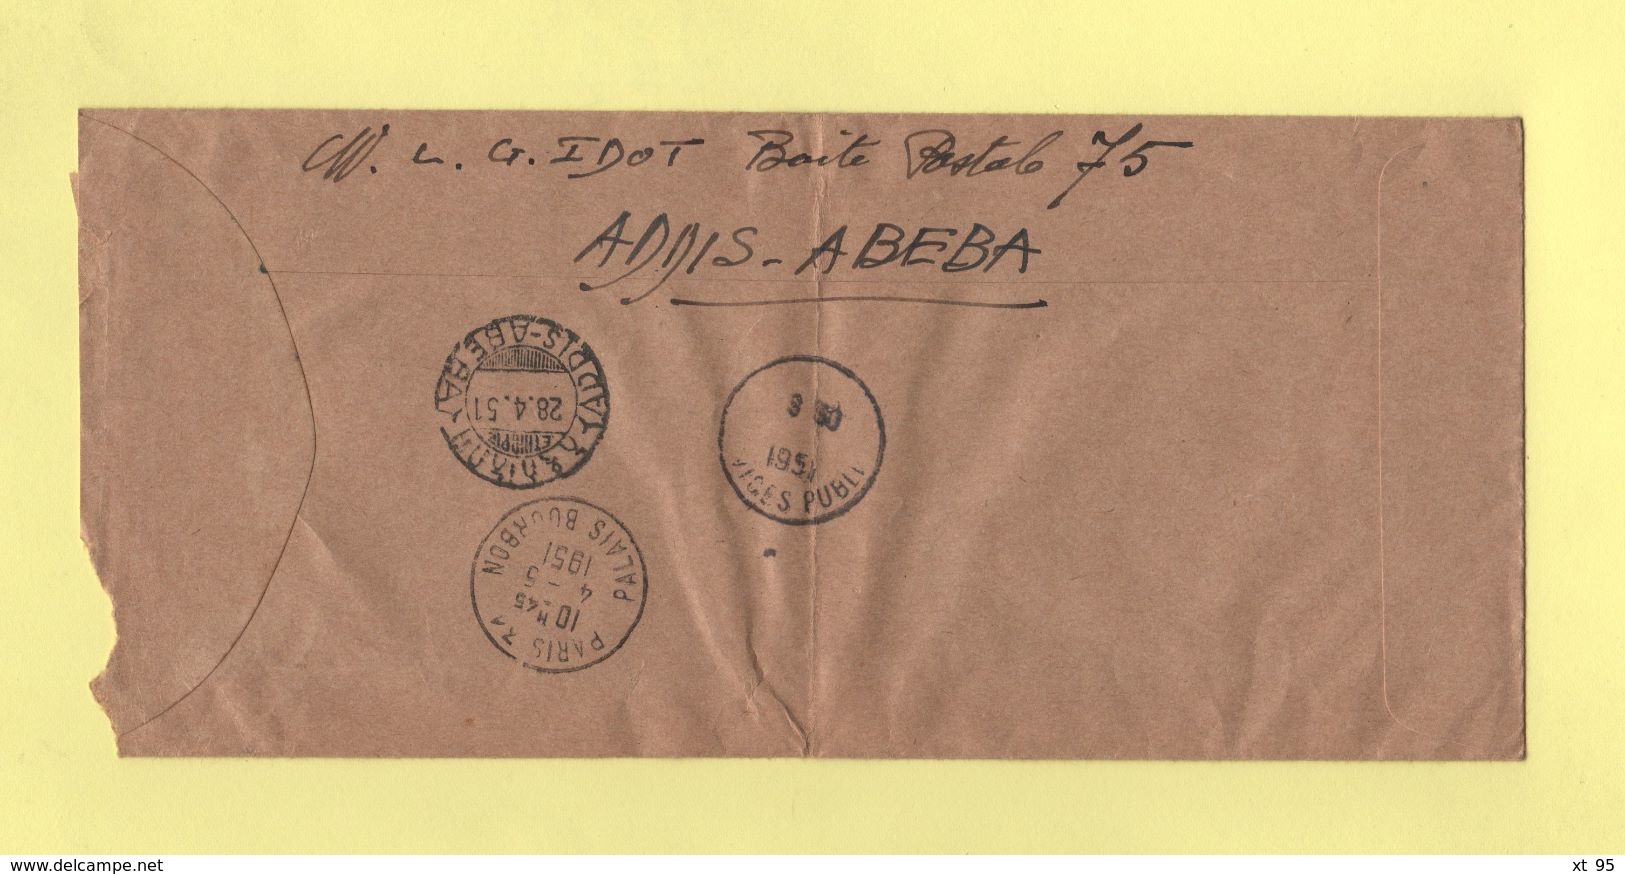 Ethiopie - Dire Dawa - Addis Abeda - 26 Avril 1951 - Recommande Pour La France - Ethiopie